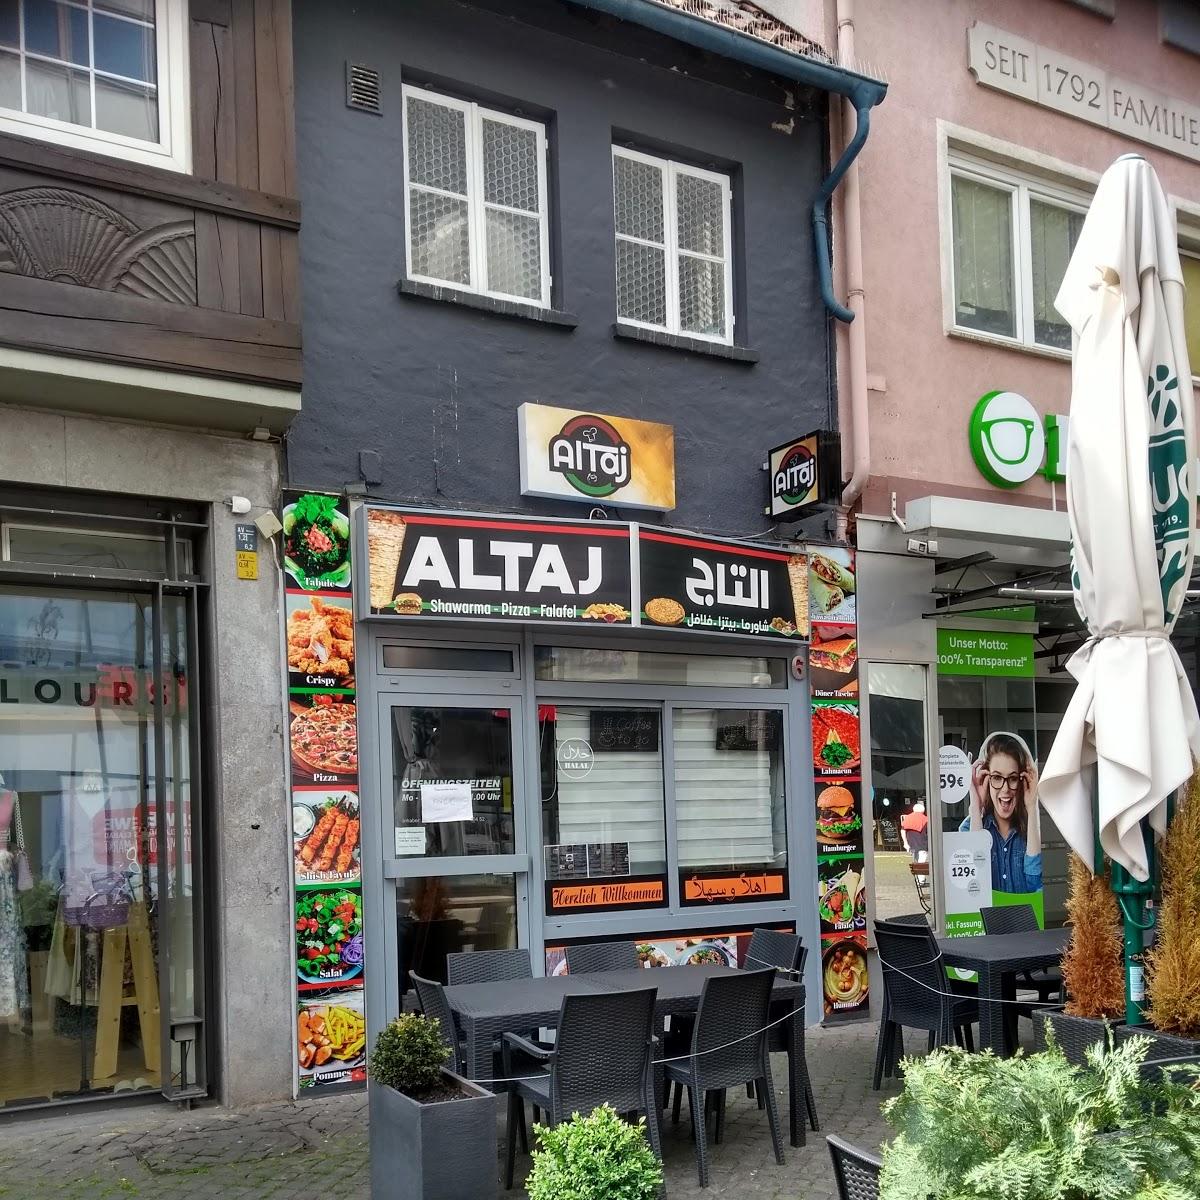 Restaurant "AL TAJ" in Braunschweig